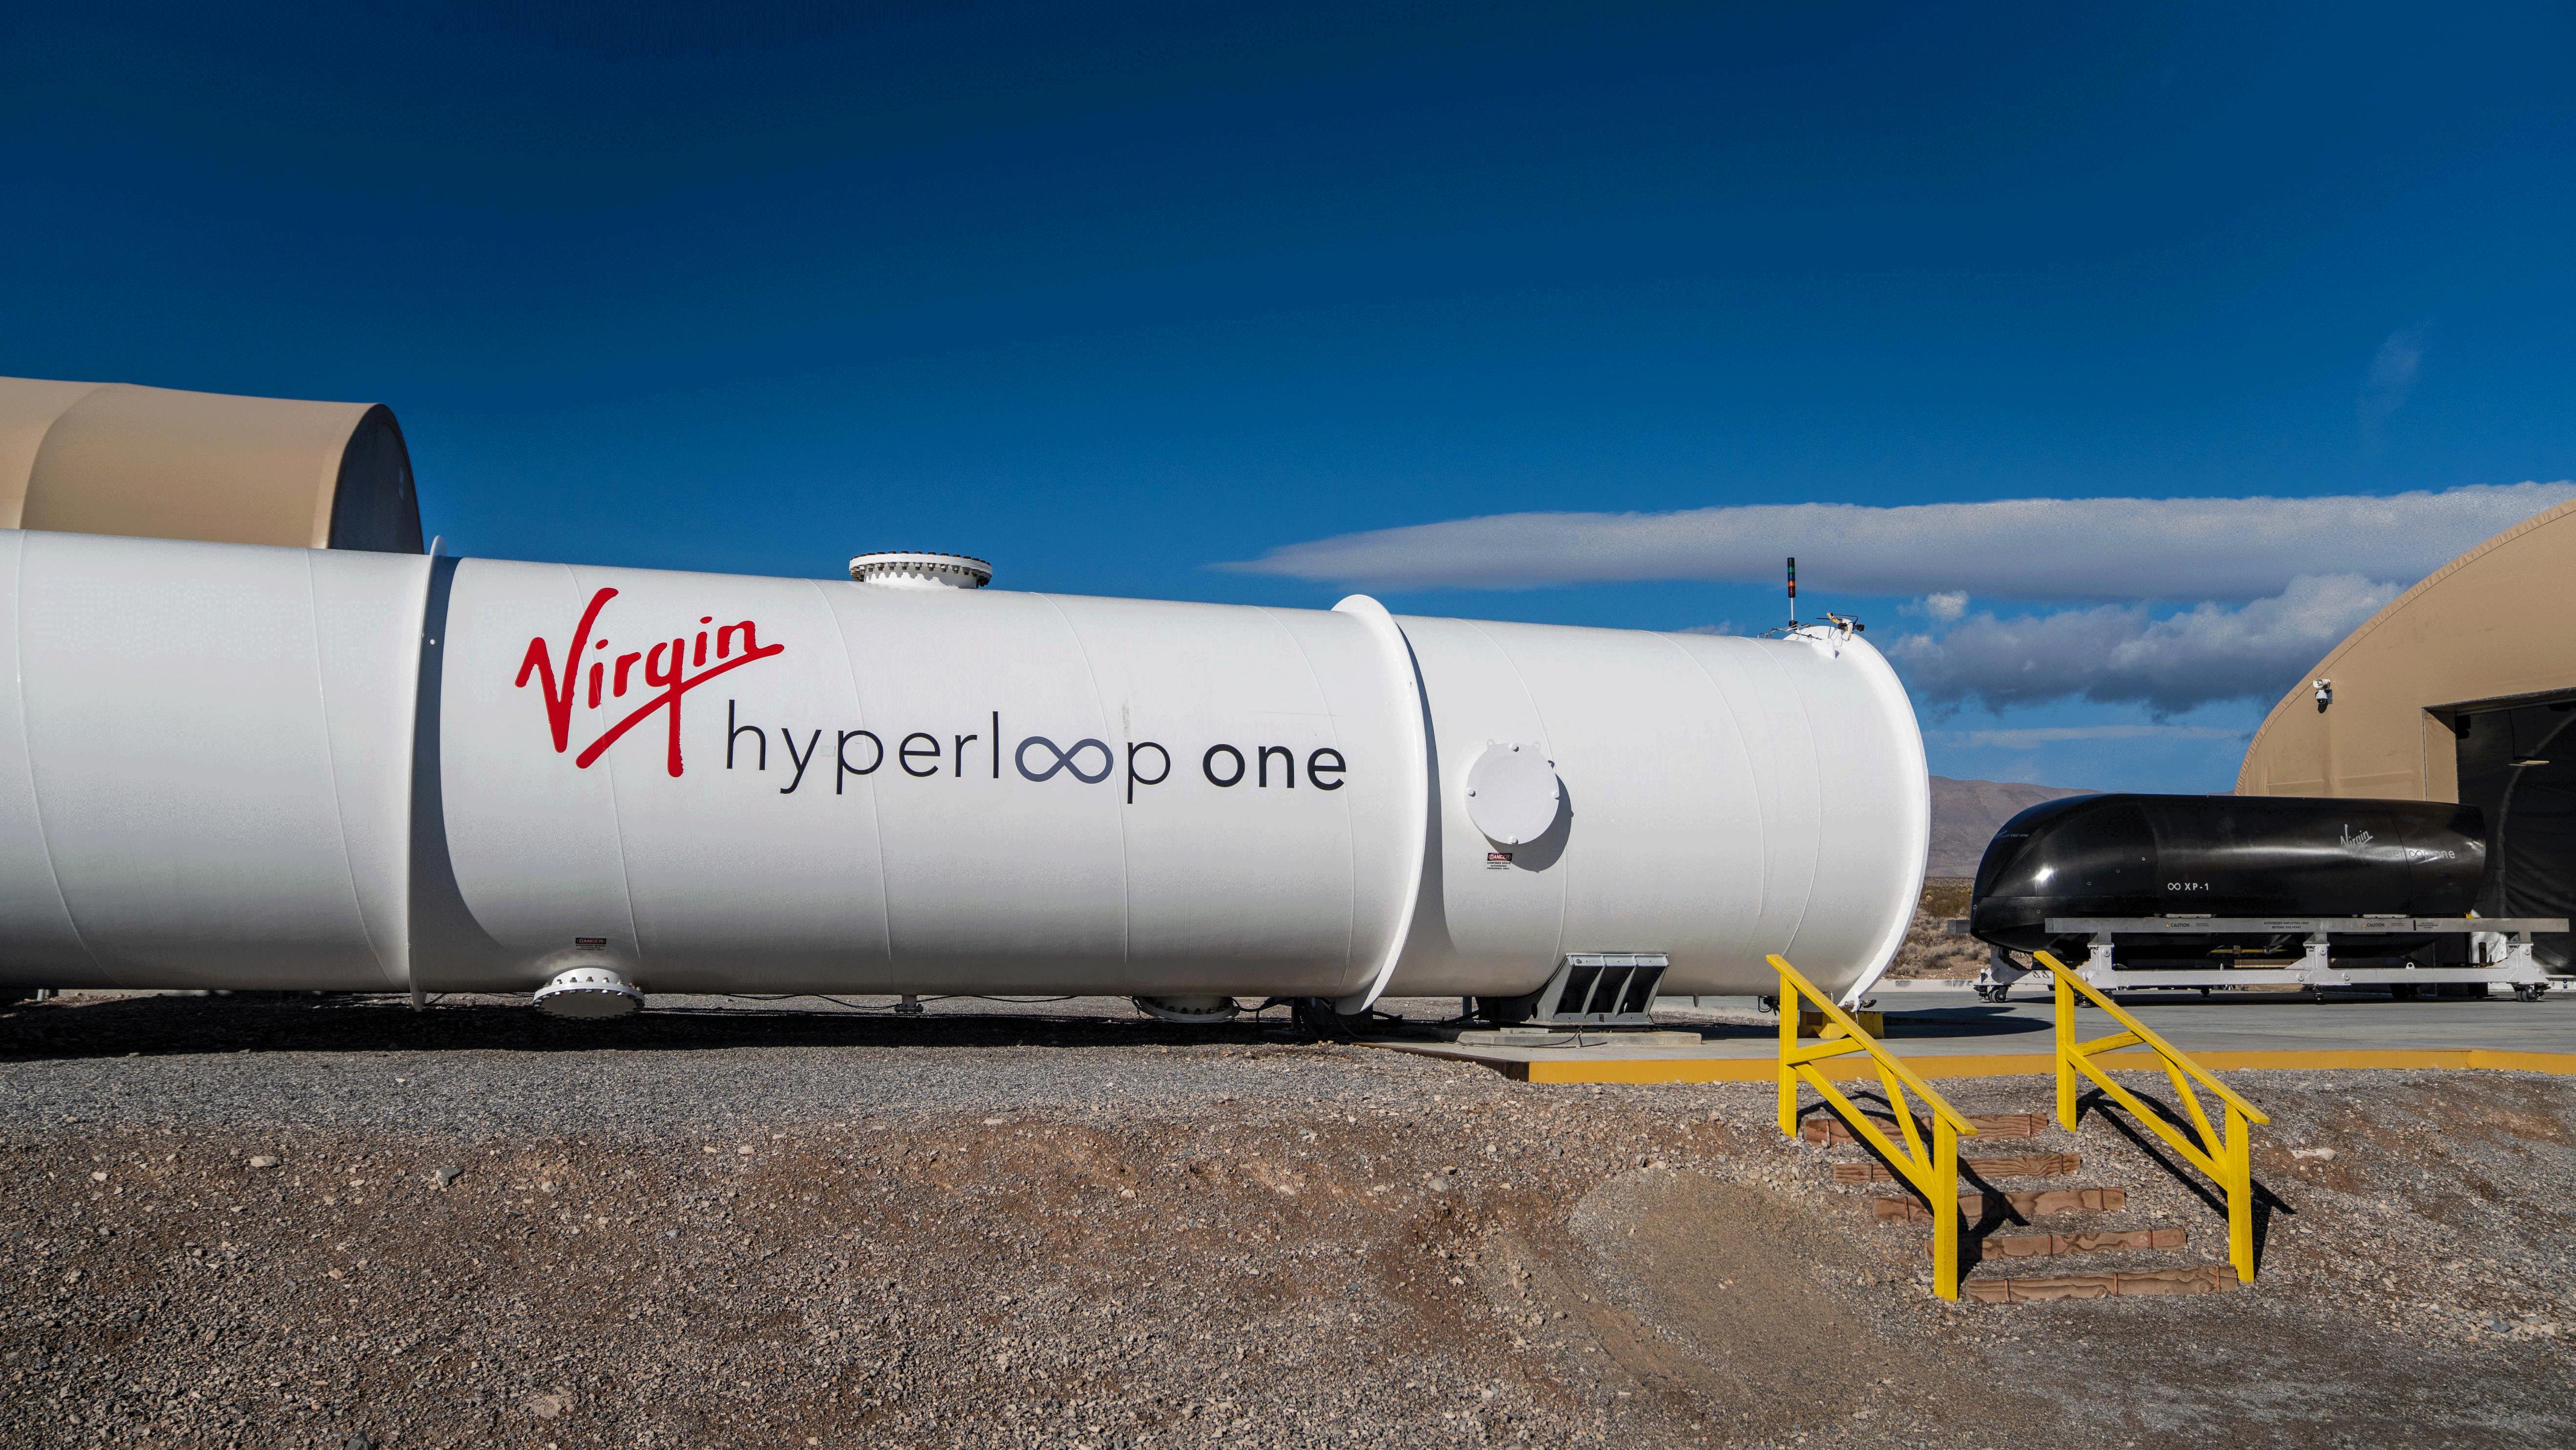 Virgin Hyperloop One could build the world's first hyperloop in India -